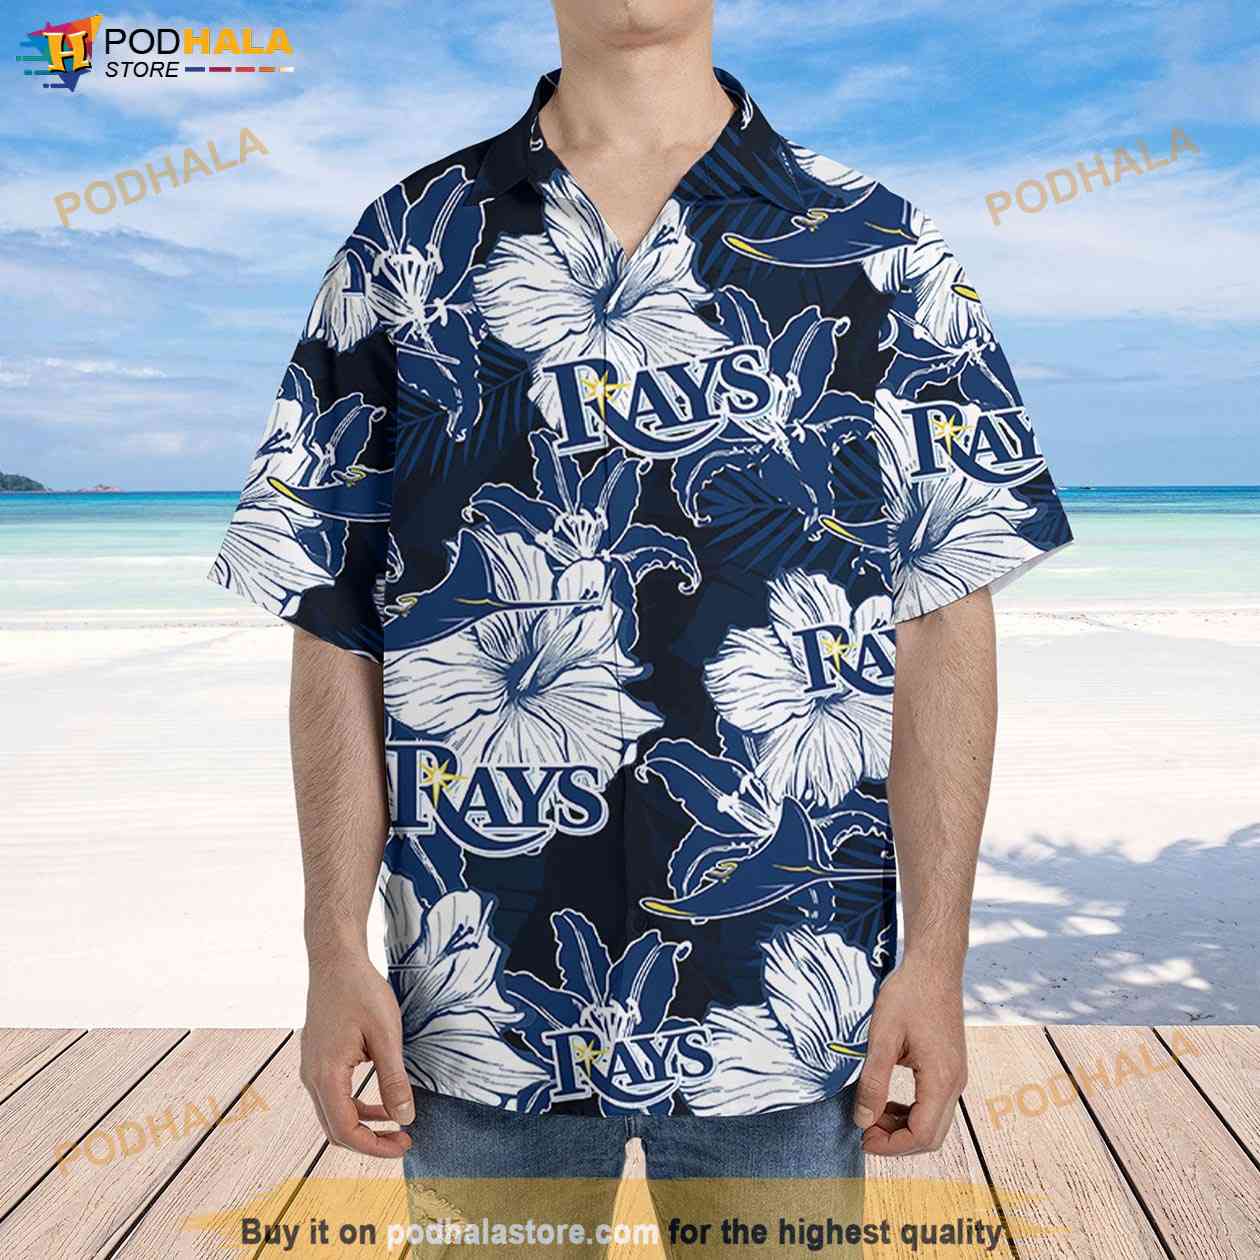 tampa bay rays youth shirt